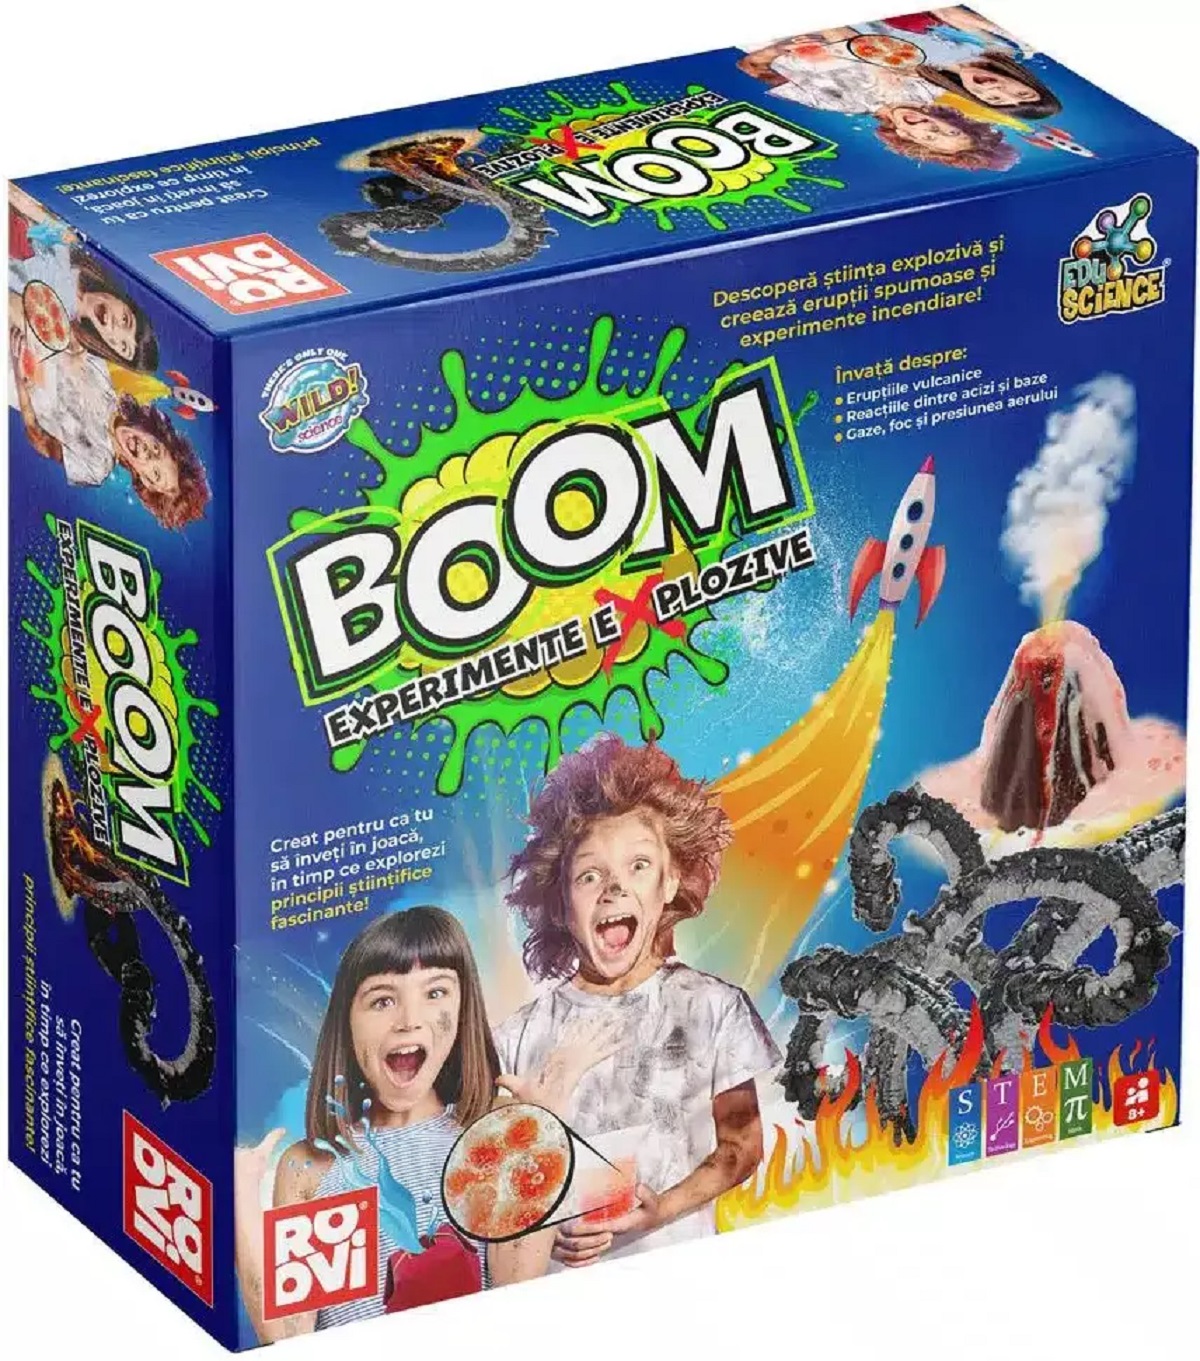 Joc: Boom- Experimente explozive